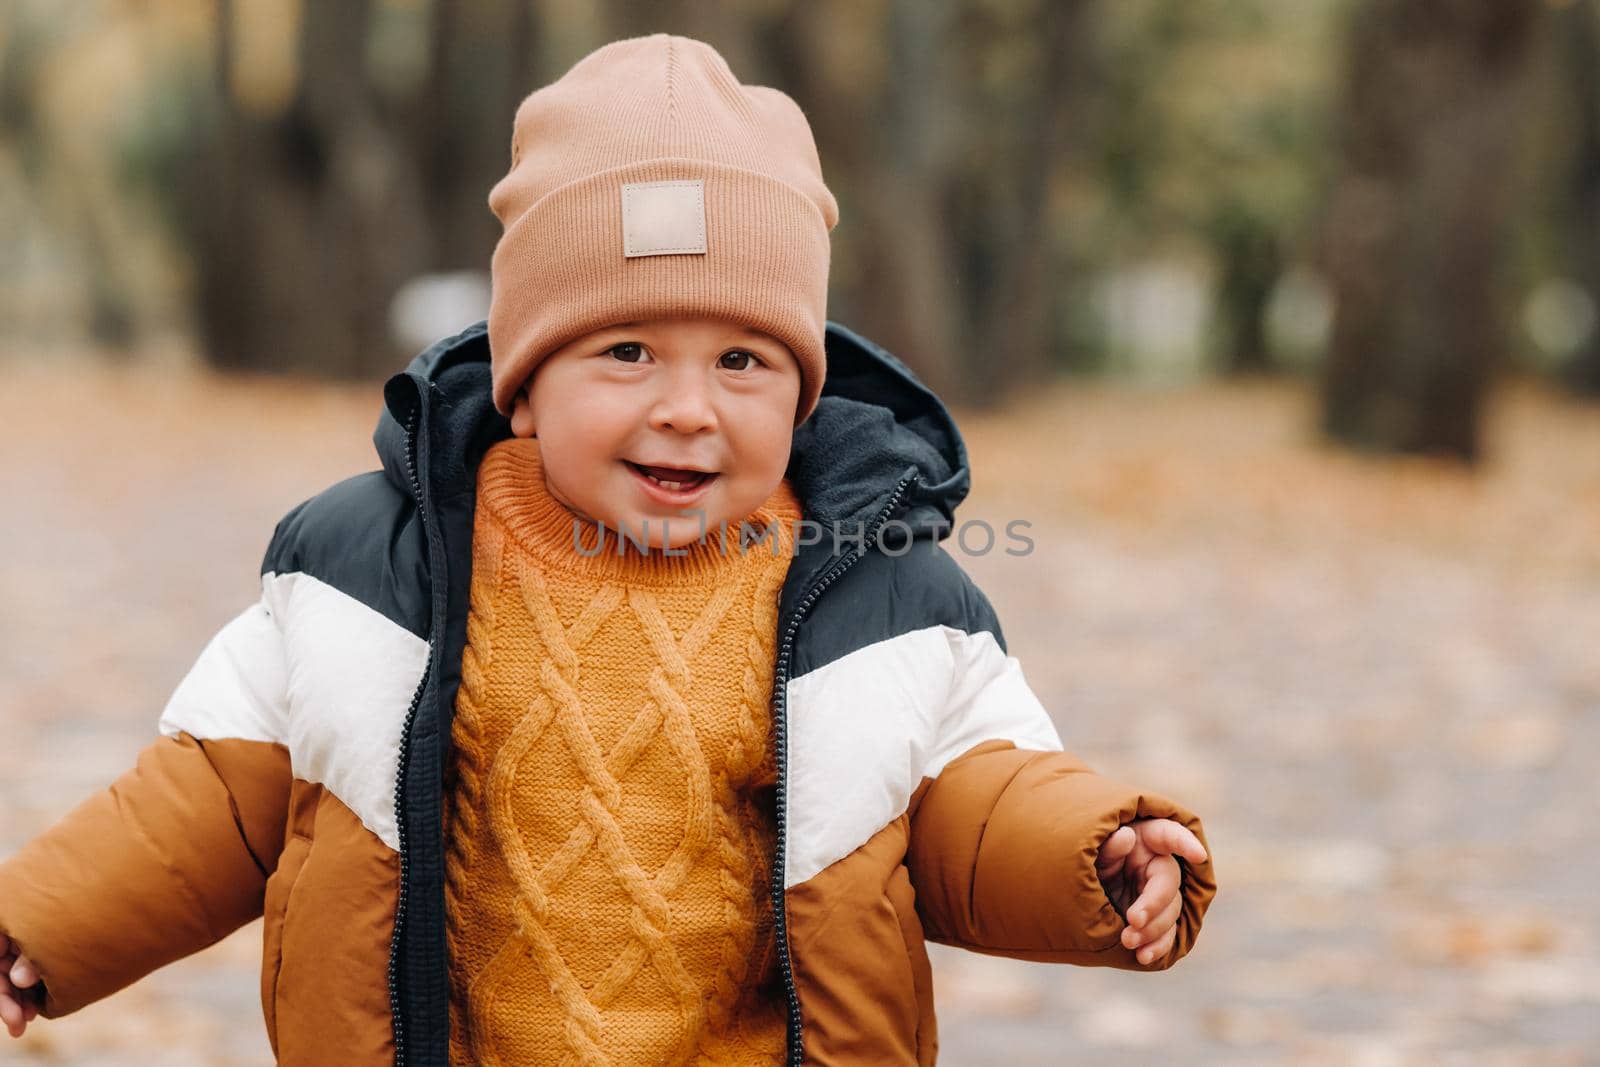 a little boy smiles in an autumn Park. A family walks through the Golden autumn nature Park